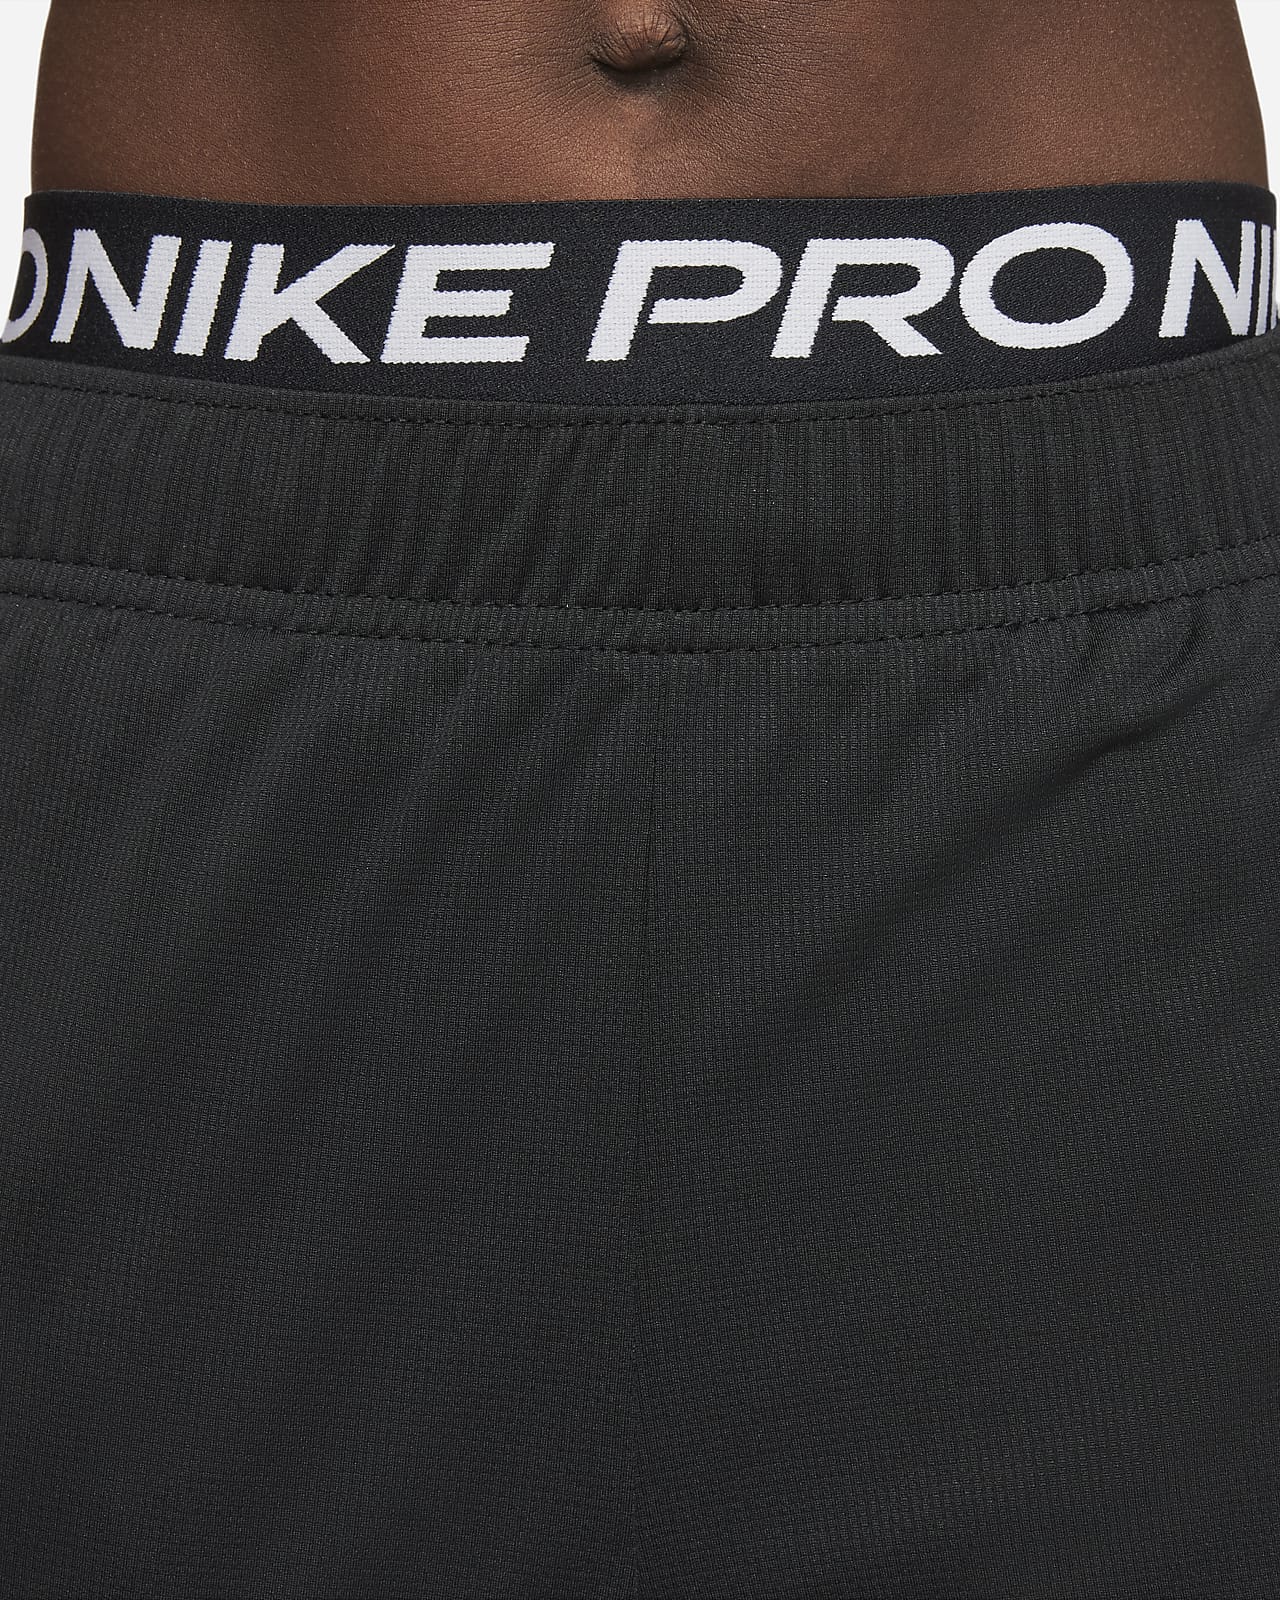 Nike Men's Dri-FIT Pro 3/4 Tight (Black, Small)